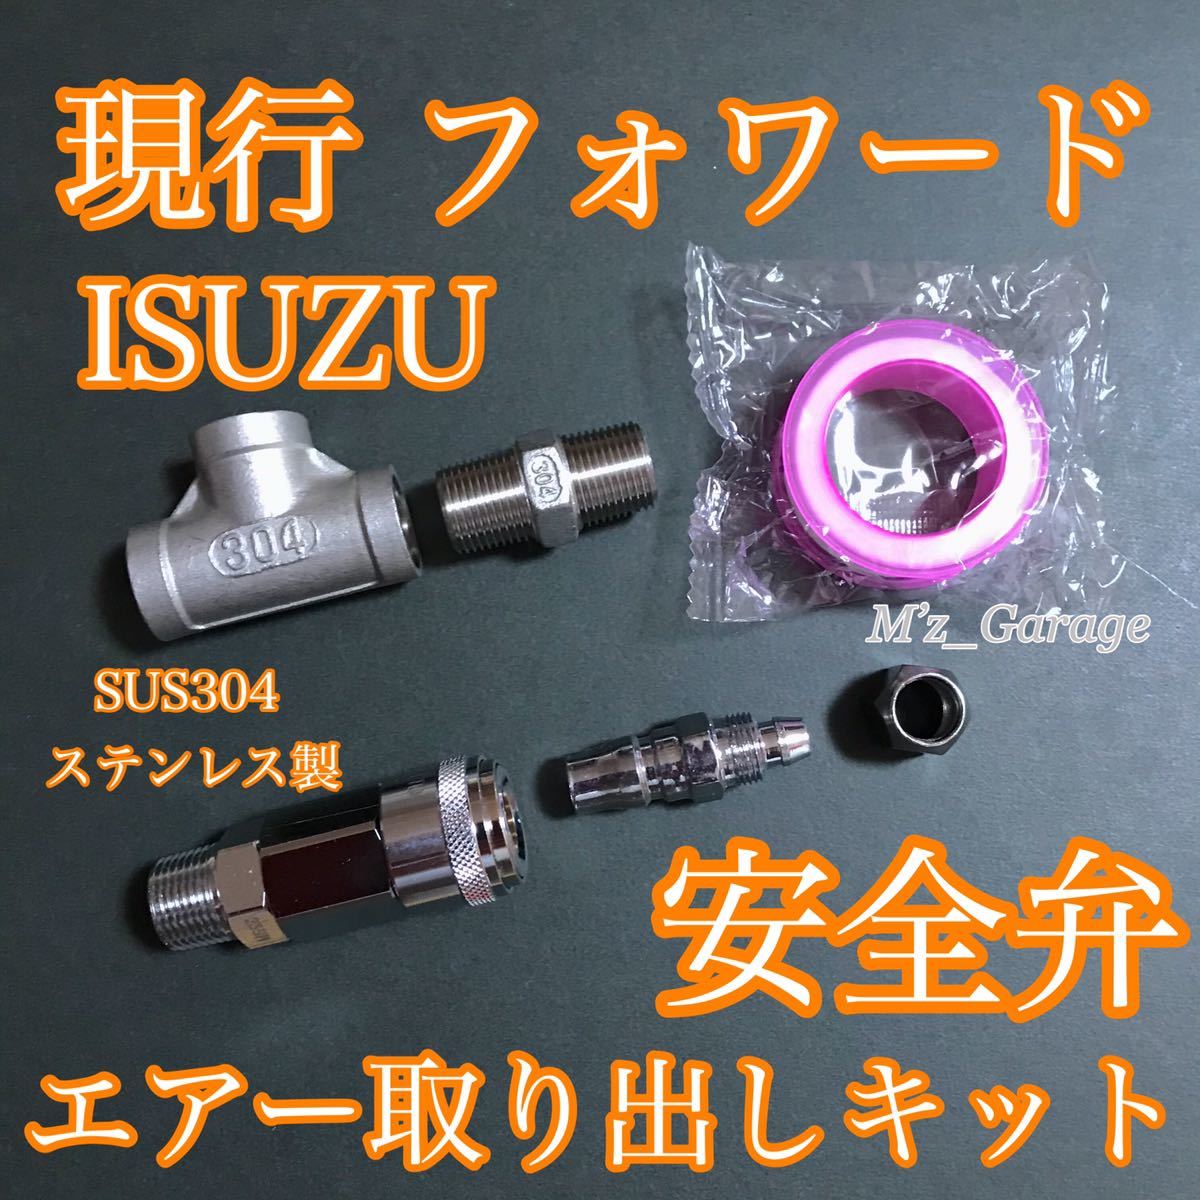 [ISUZU] present Isuzu Forward safety . air take out kit 